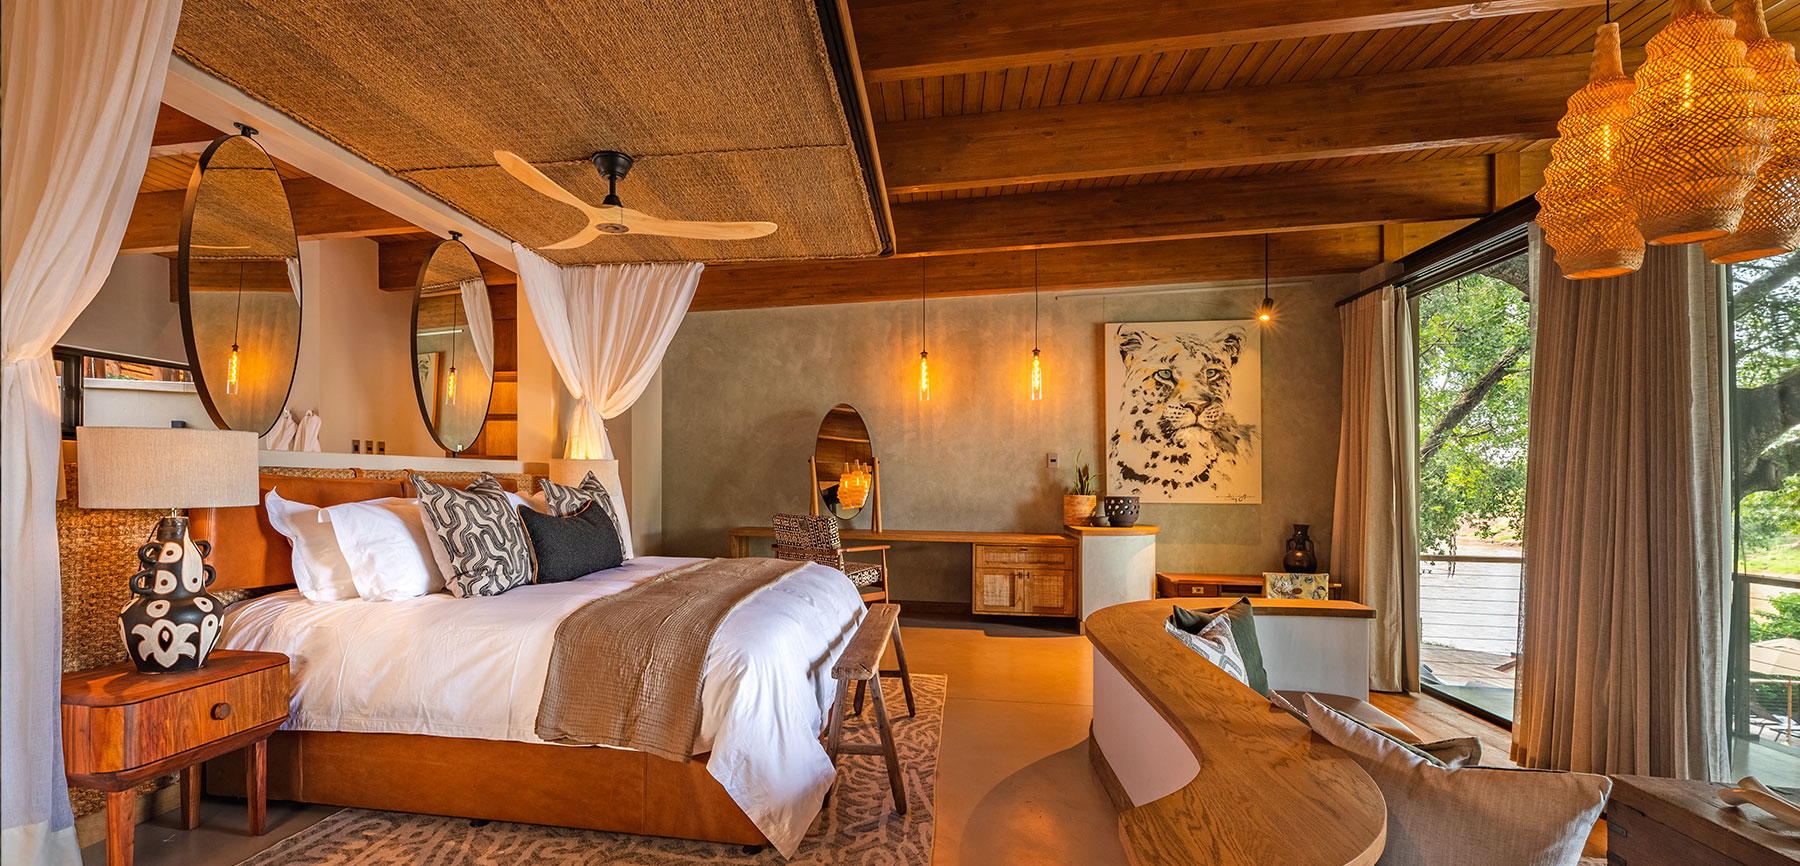 Luxury accommodation, Klaserie Reserver - Greater Kruger Park Region